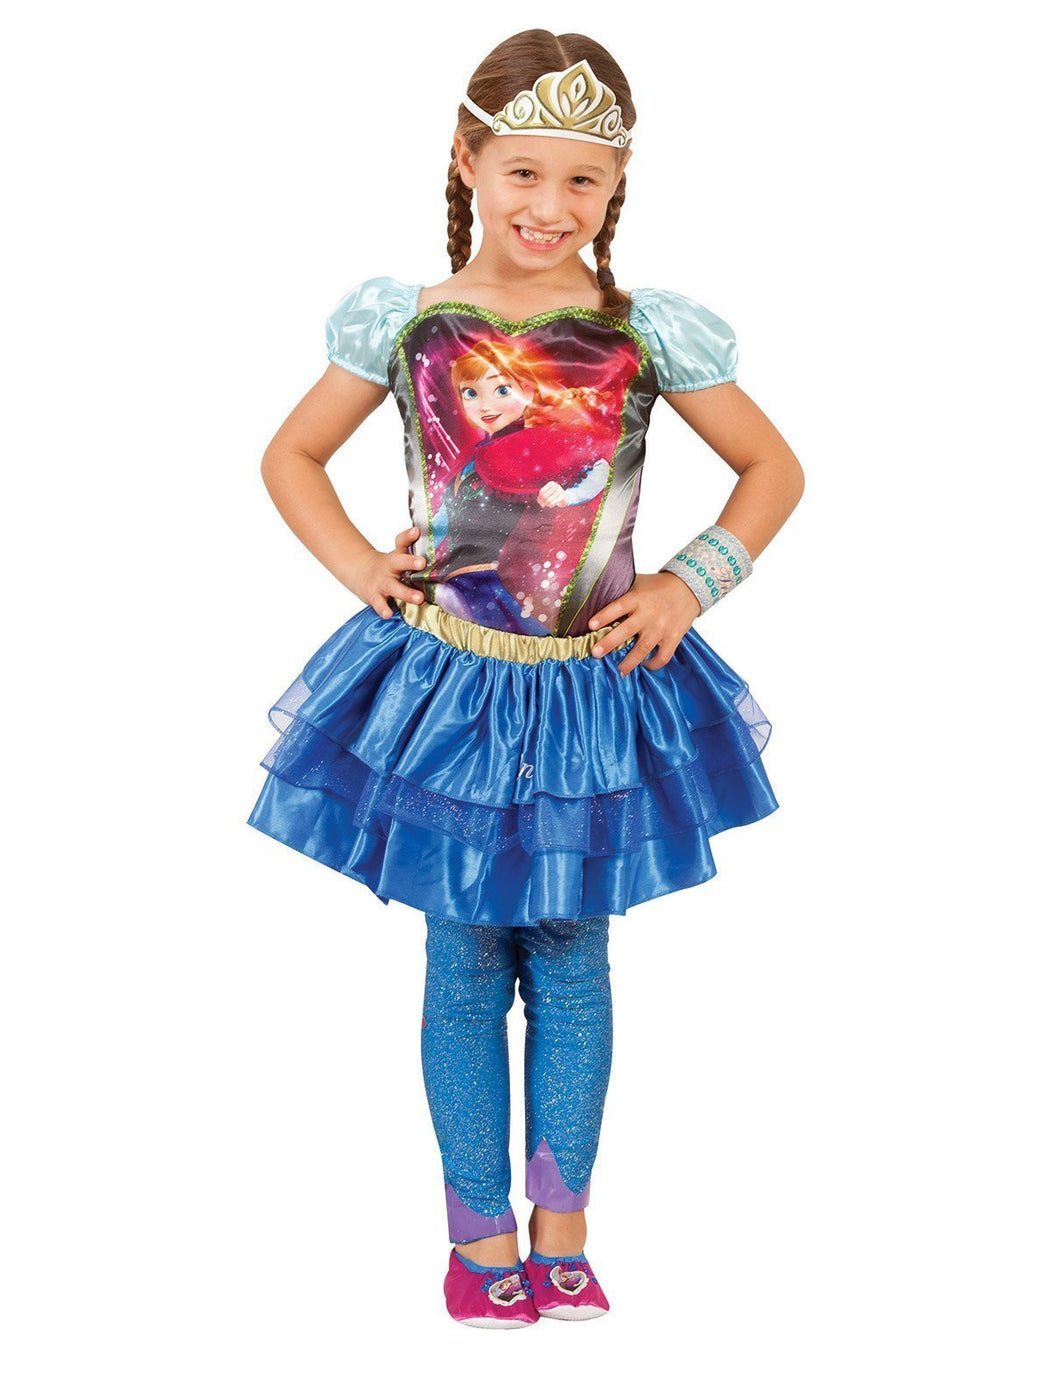 Anna Princess Top for Kids - Disney Frozen | Costume Super Centre